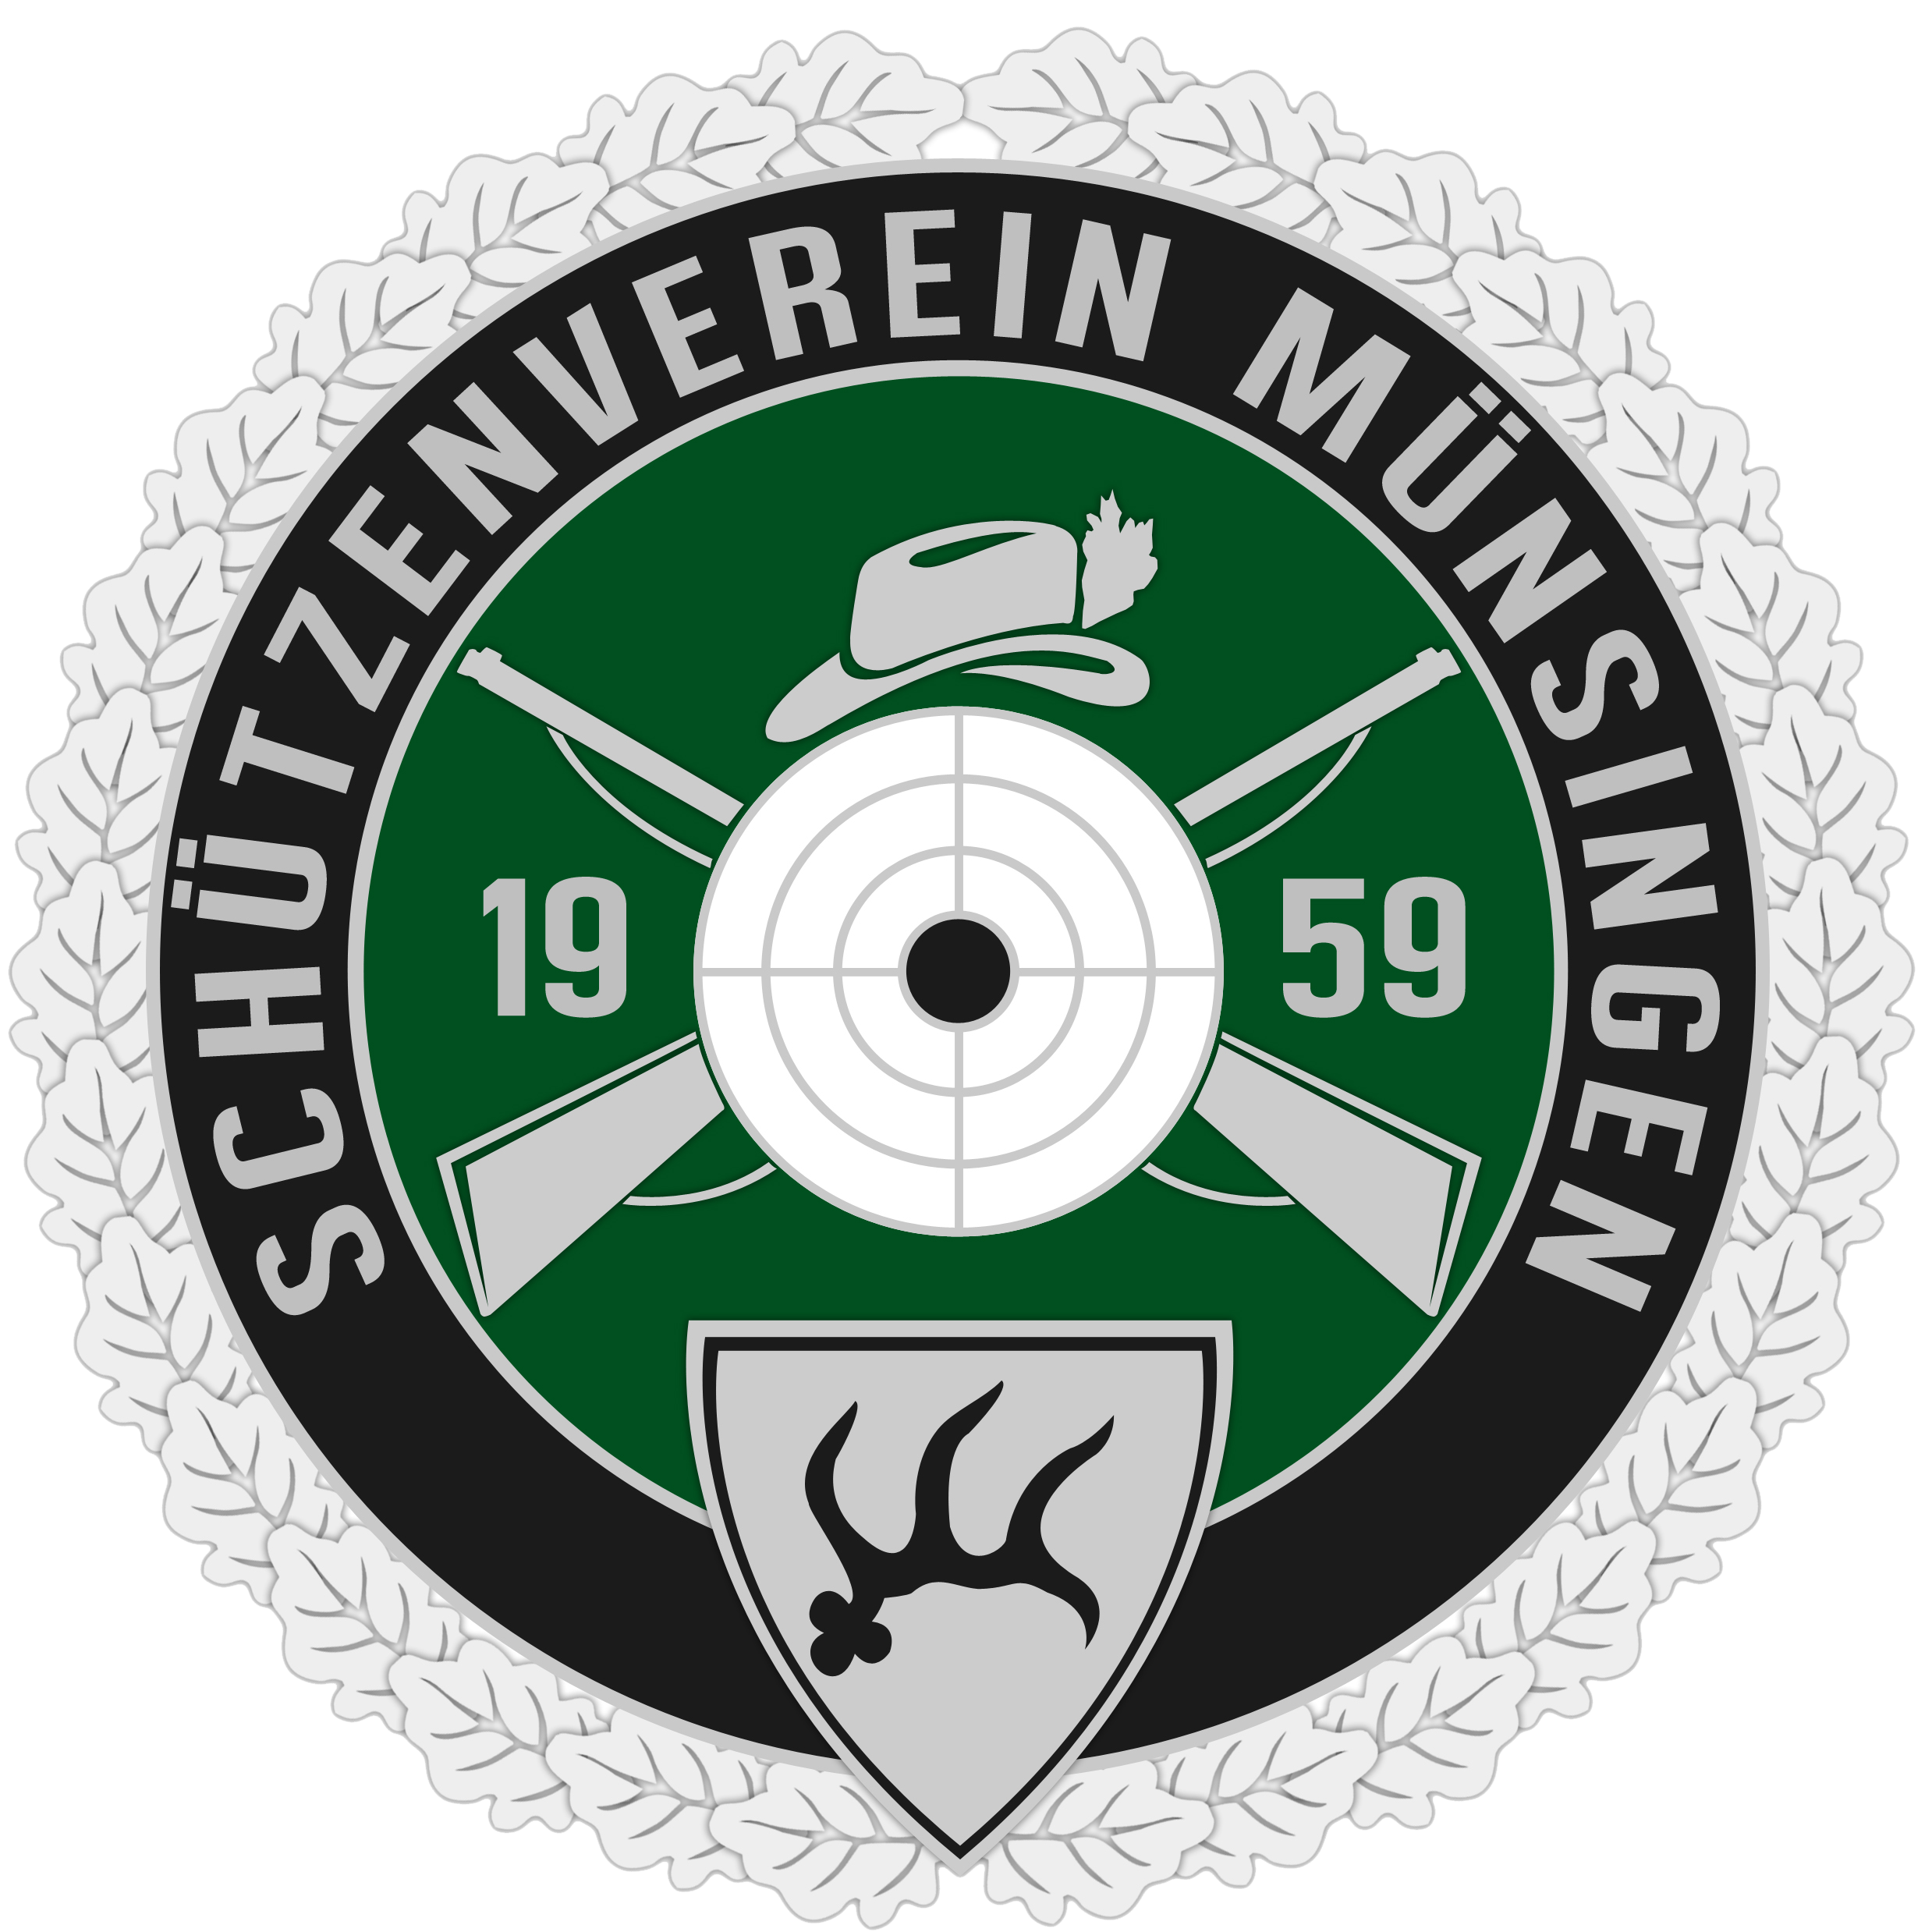 SV-Logo